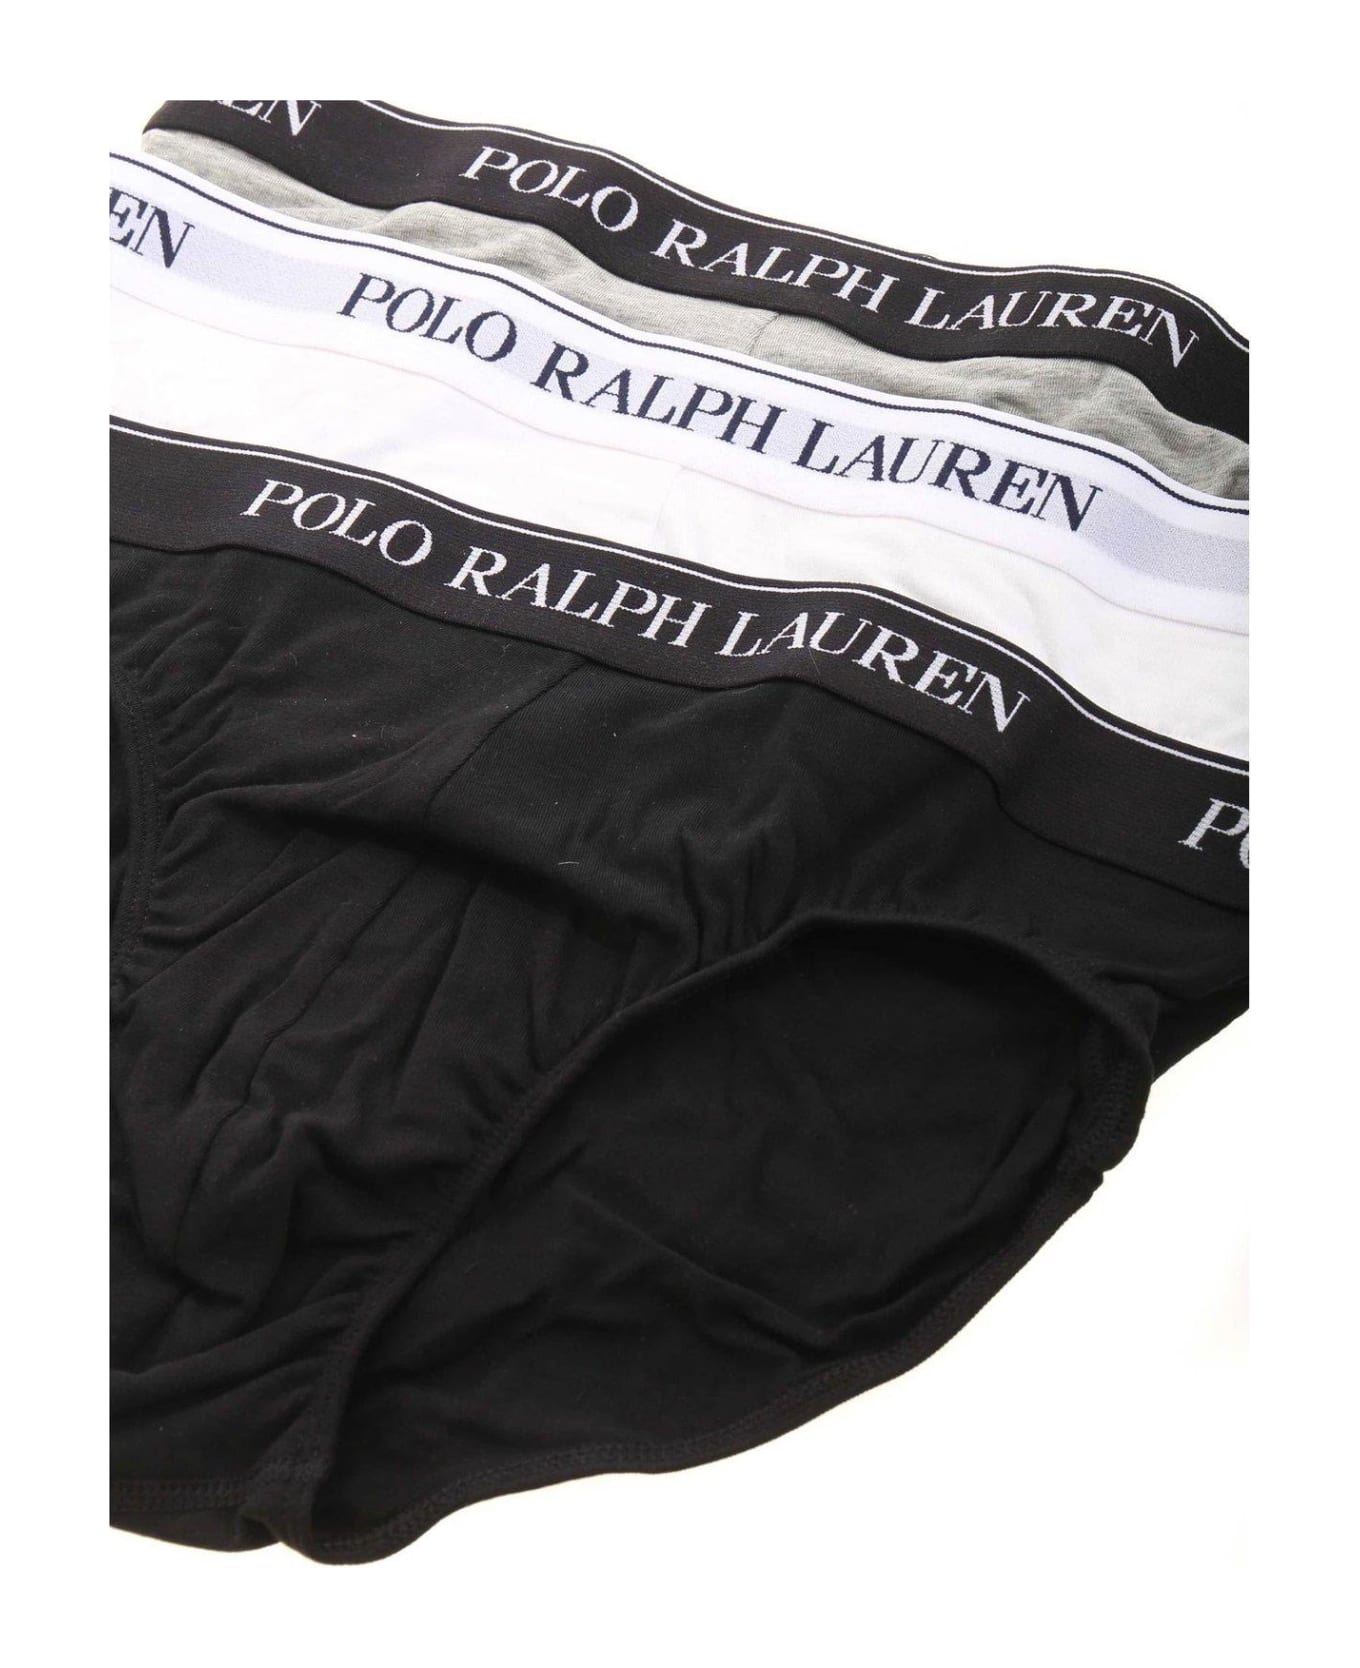 Polo Ralph Lauren Logo Band Three-pack Briefs - MULTICOLOR